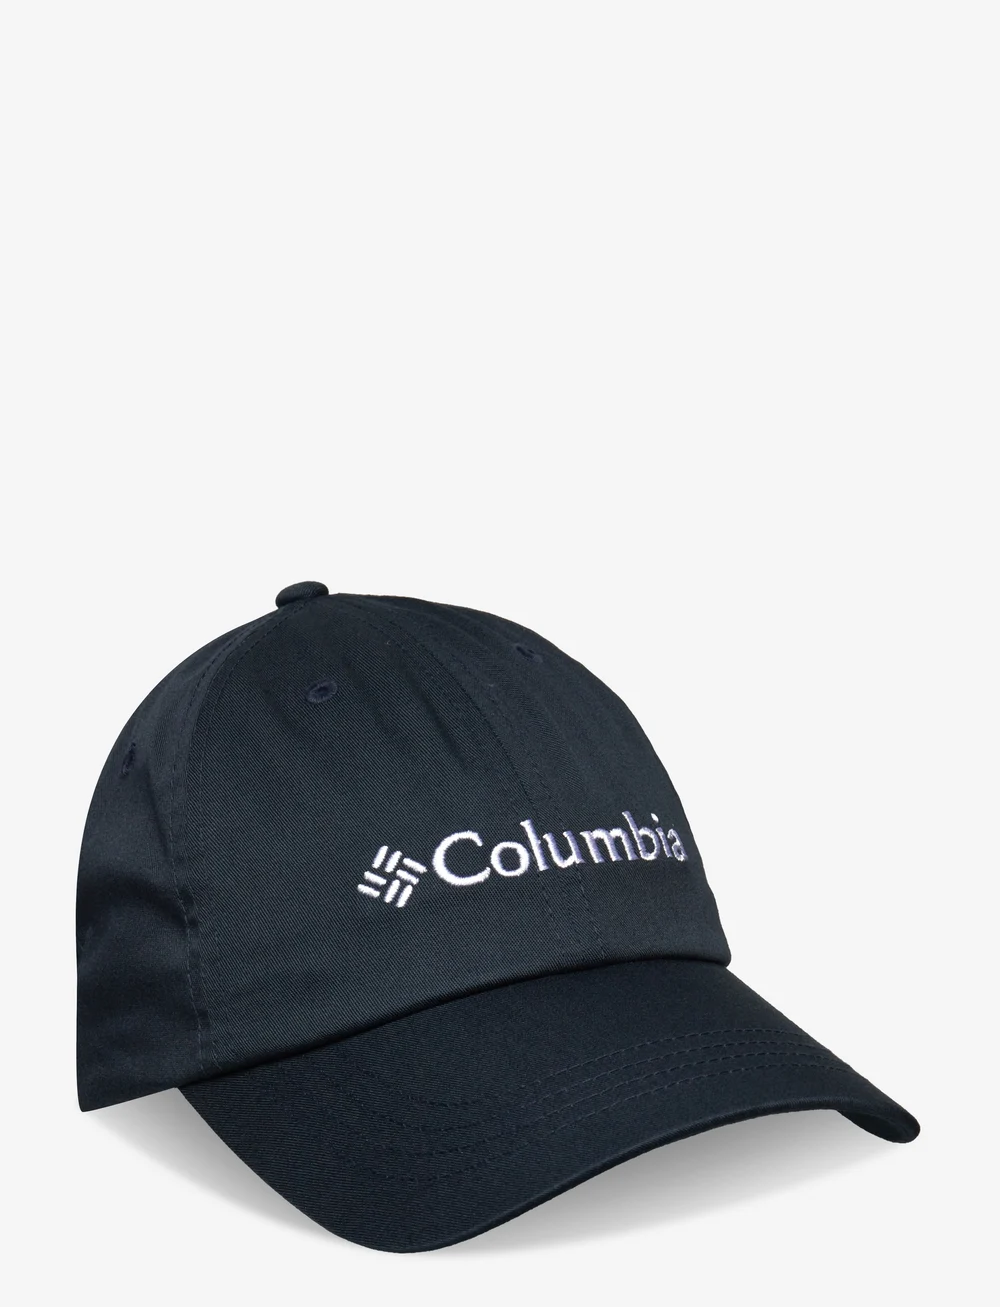 Columbia Sportswear Roc Ii Ball Cap – accessoires – einkaufen bei Booztlet